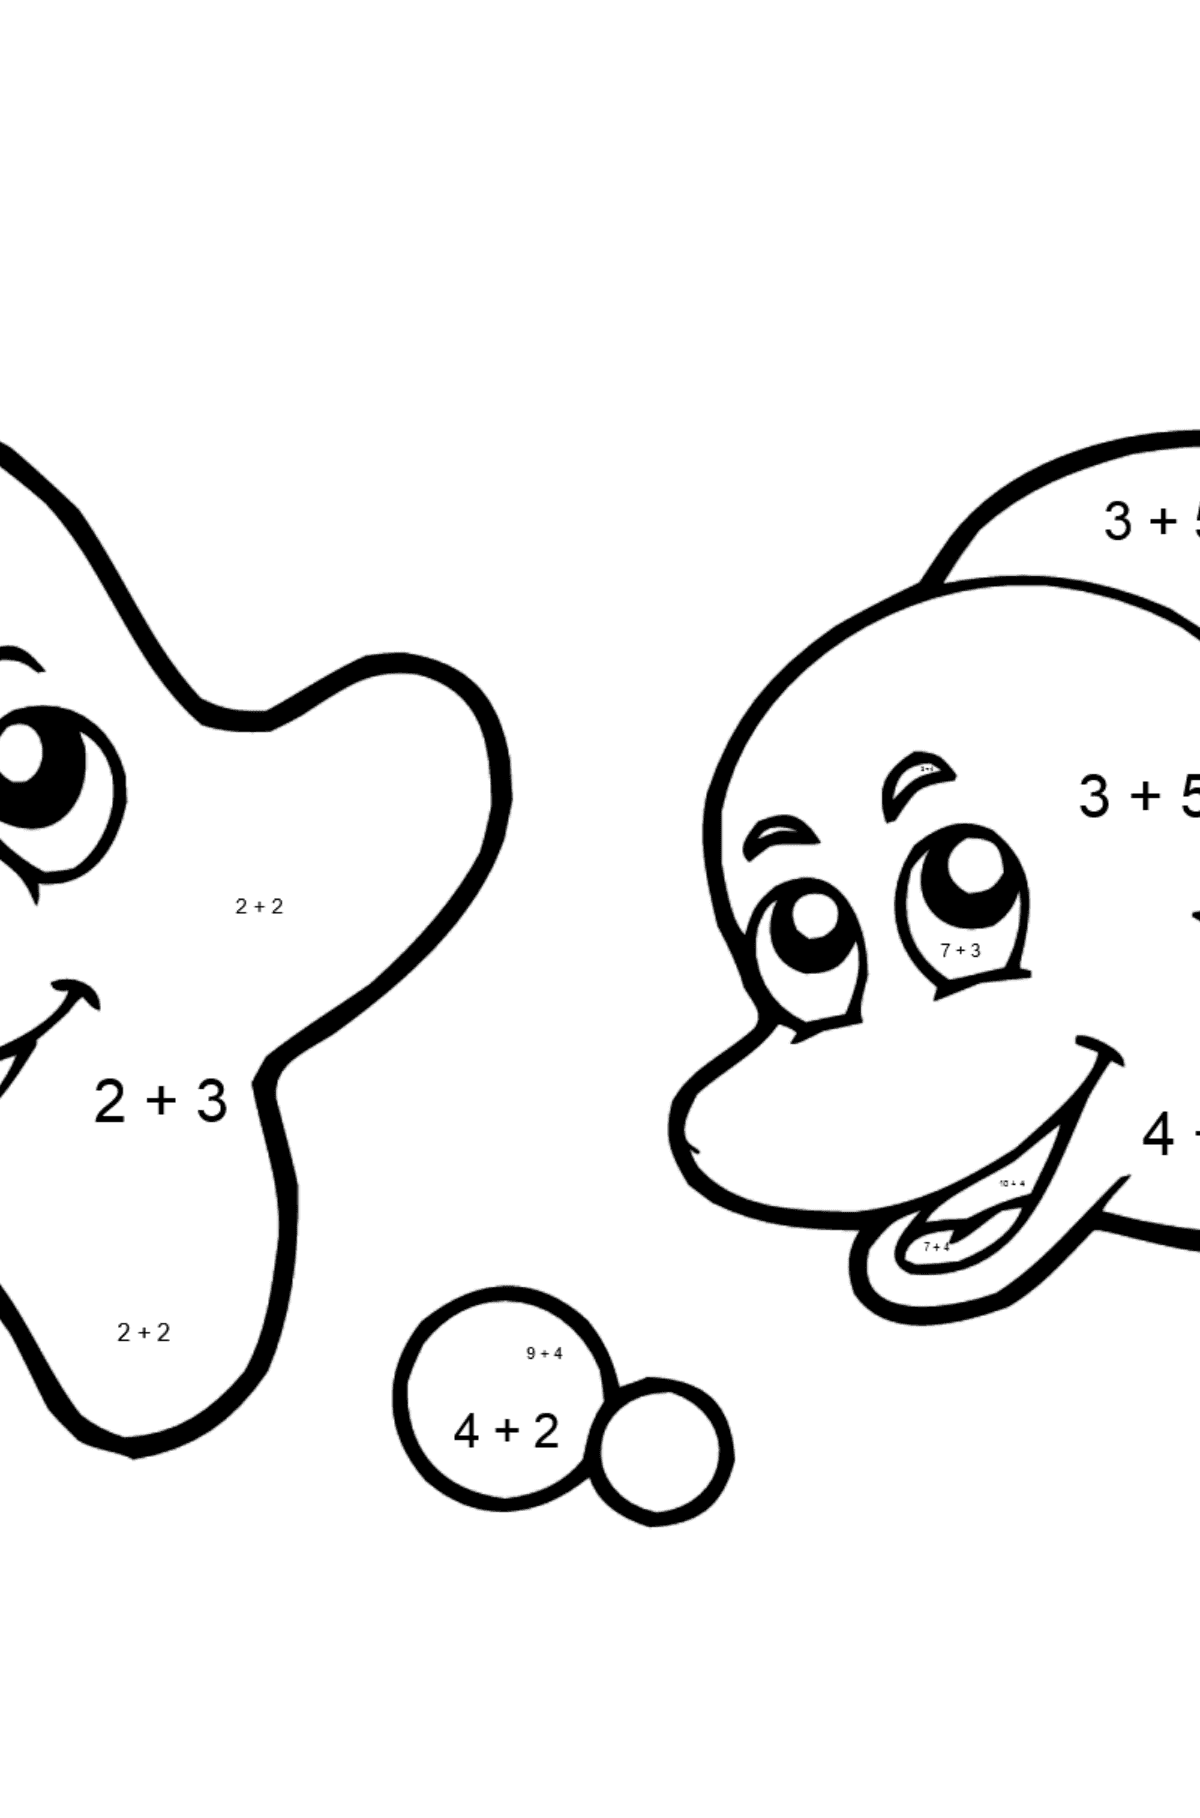 Розмальовка - Дельфін та Морська зірка - Математична Розмальовка Додавання для дітей